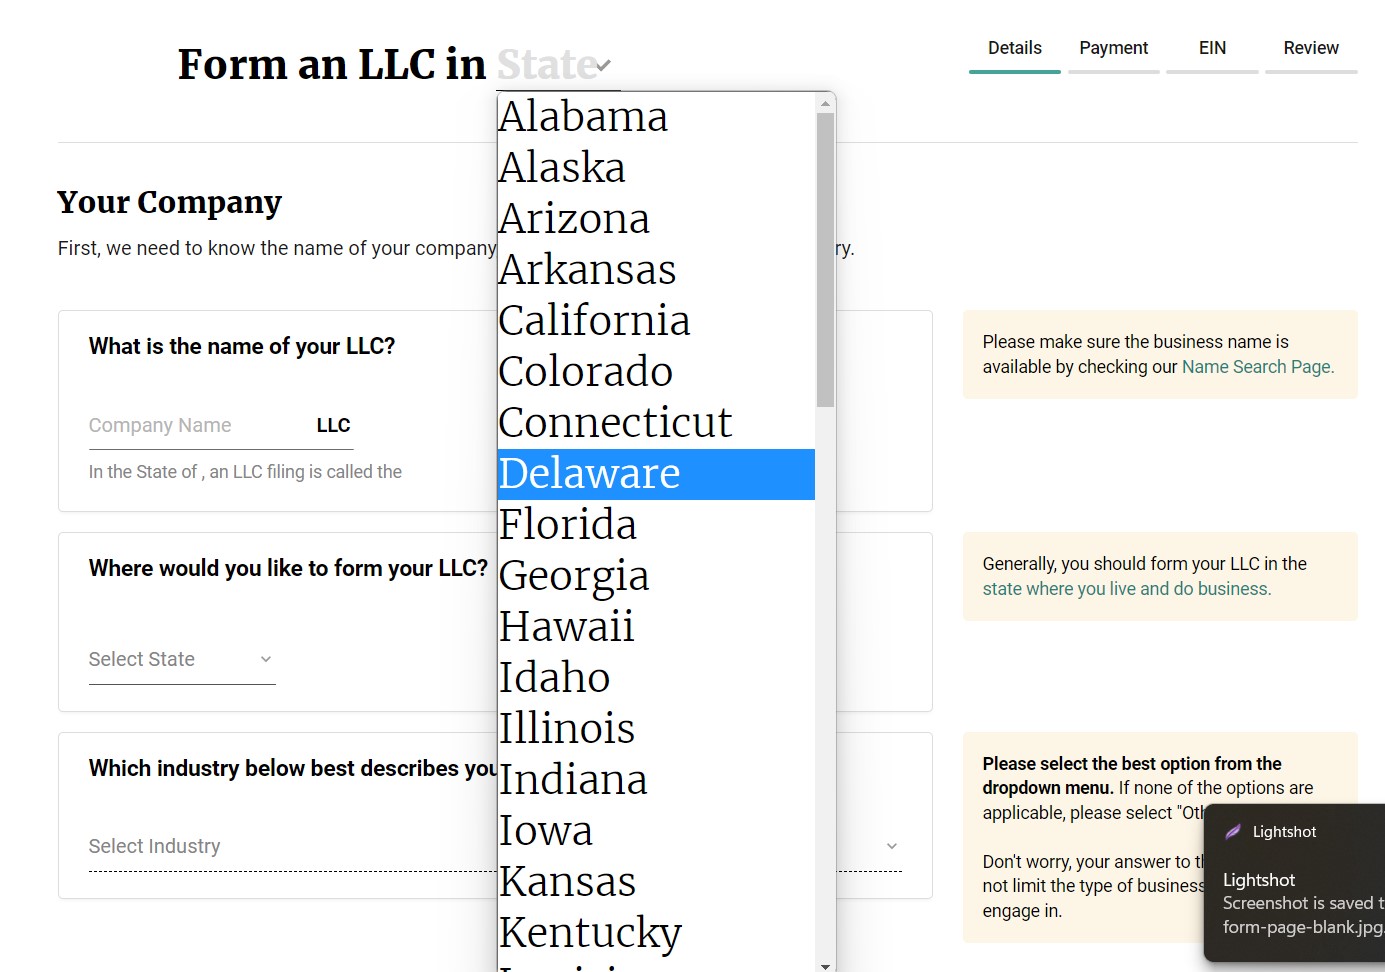 BetterLegal's LLC formation questionnaire